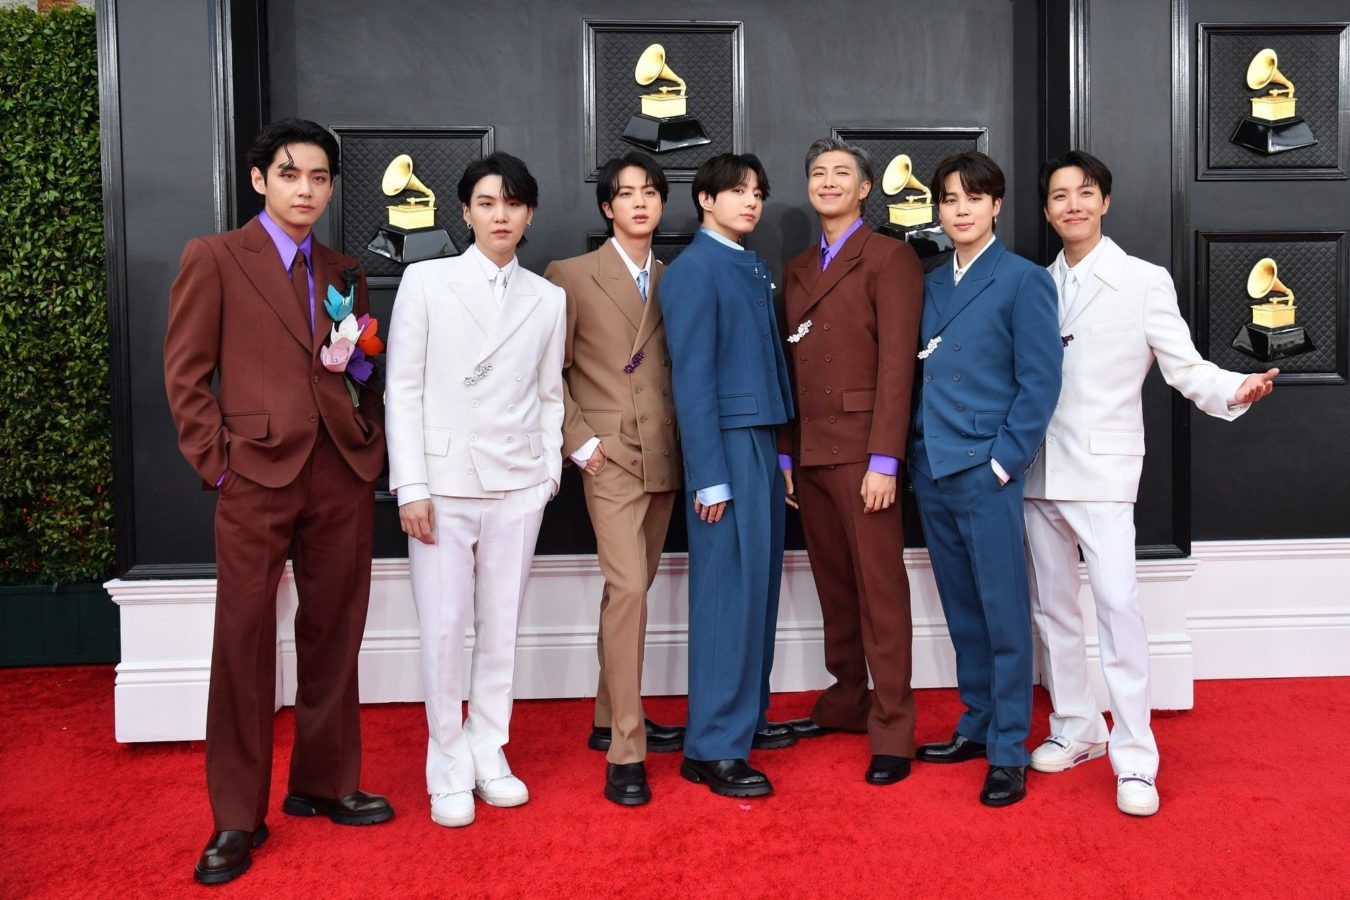 Grammys 2022: Best-dressed stars on the red carpet